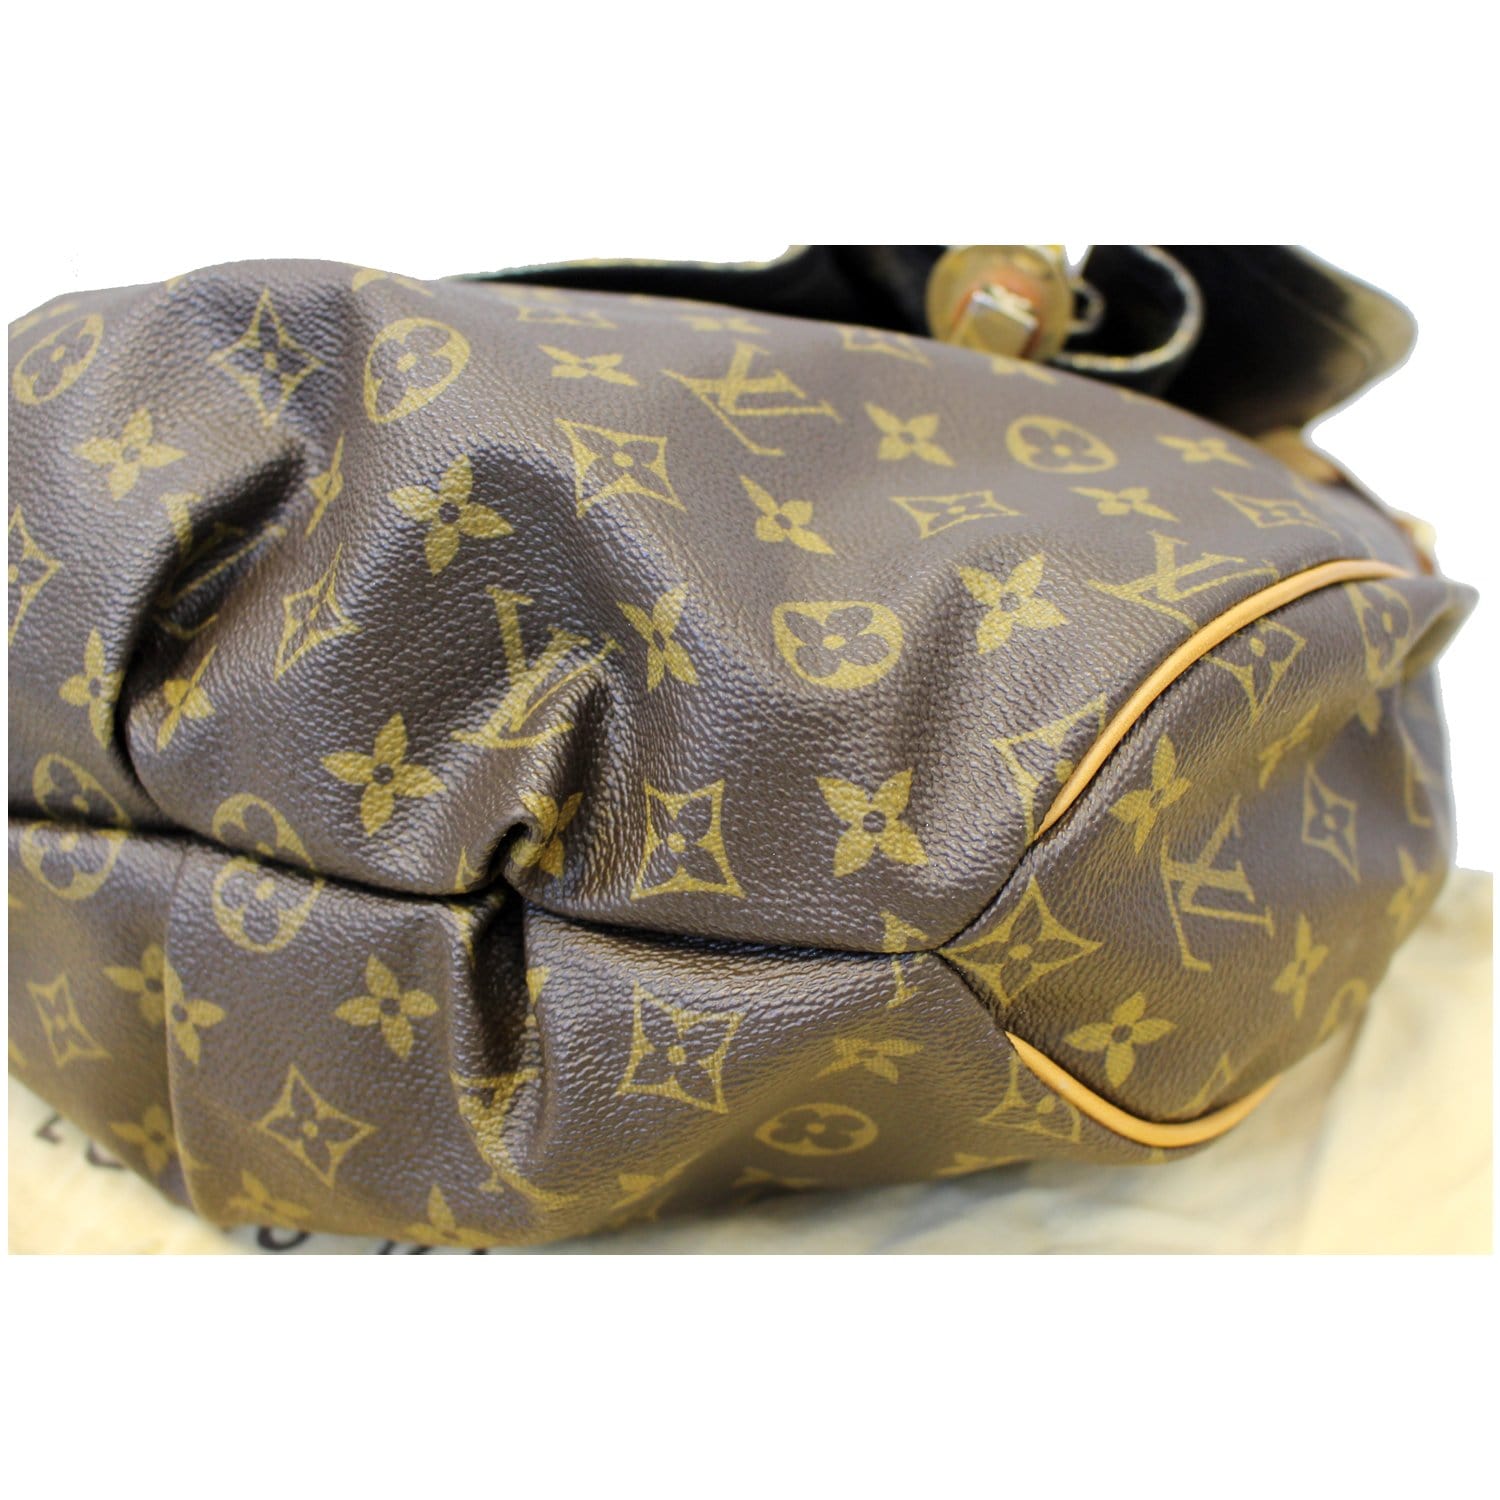 Louis Vuitton Collection 2009 Spring/Summer Kalahari Handbag